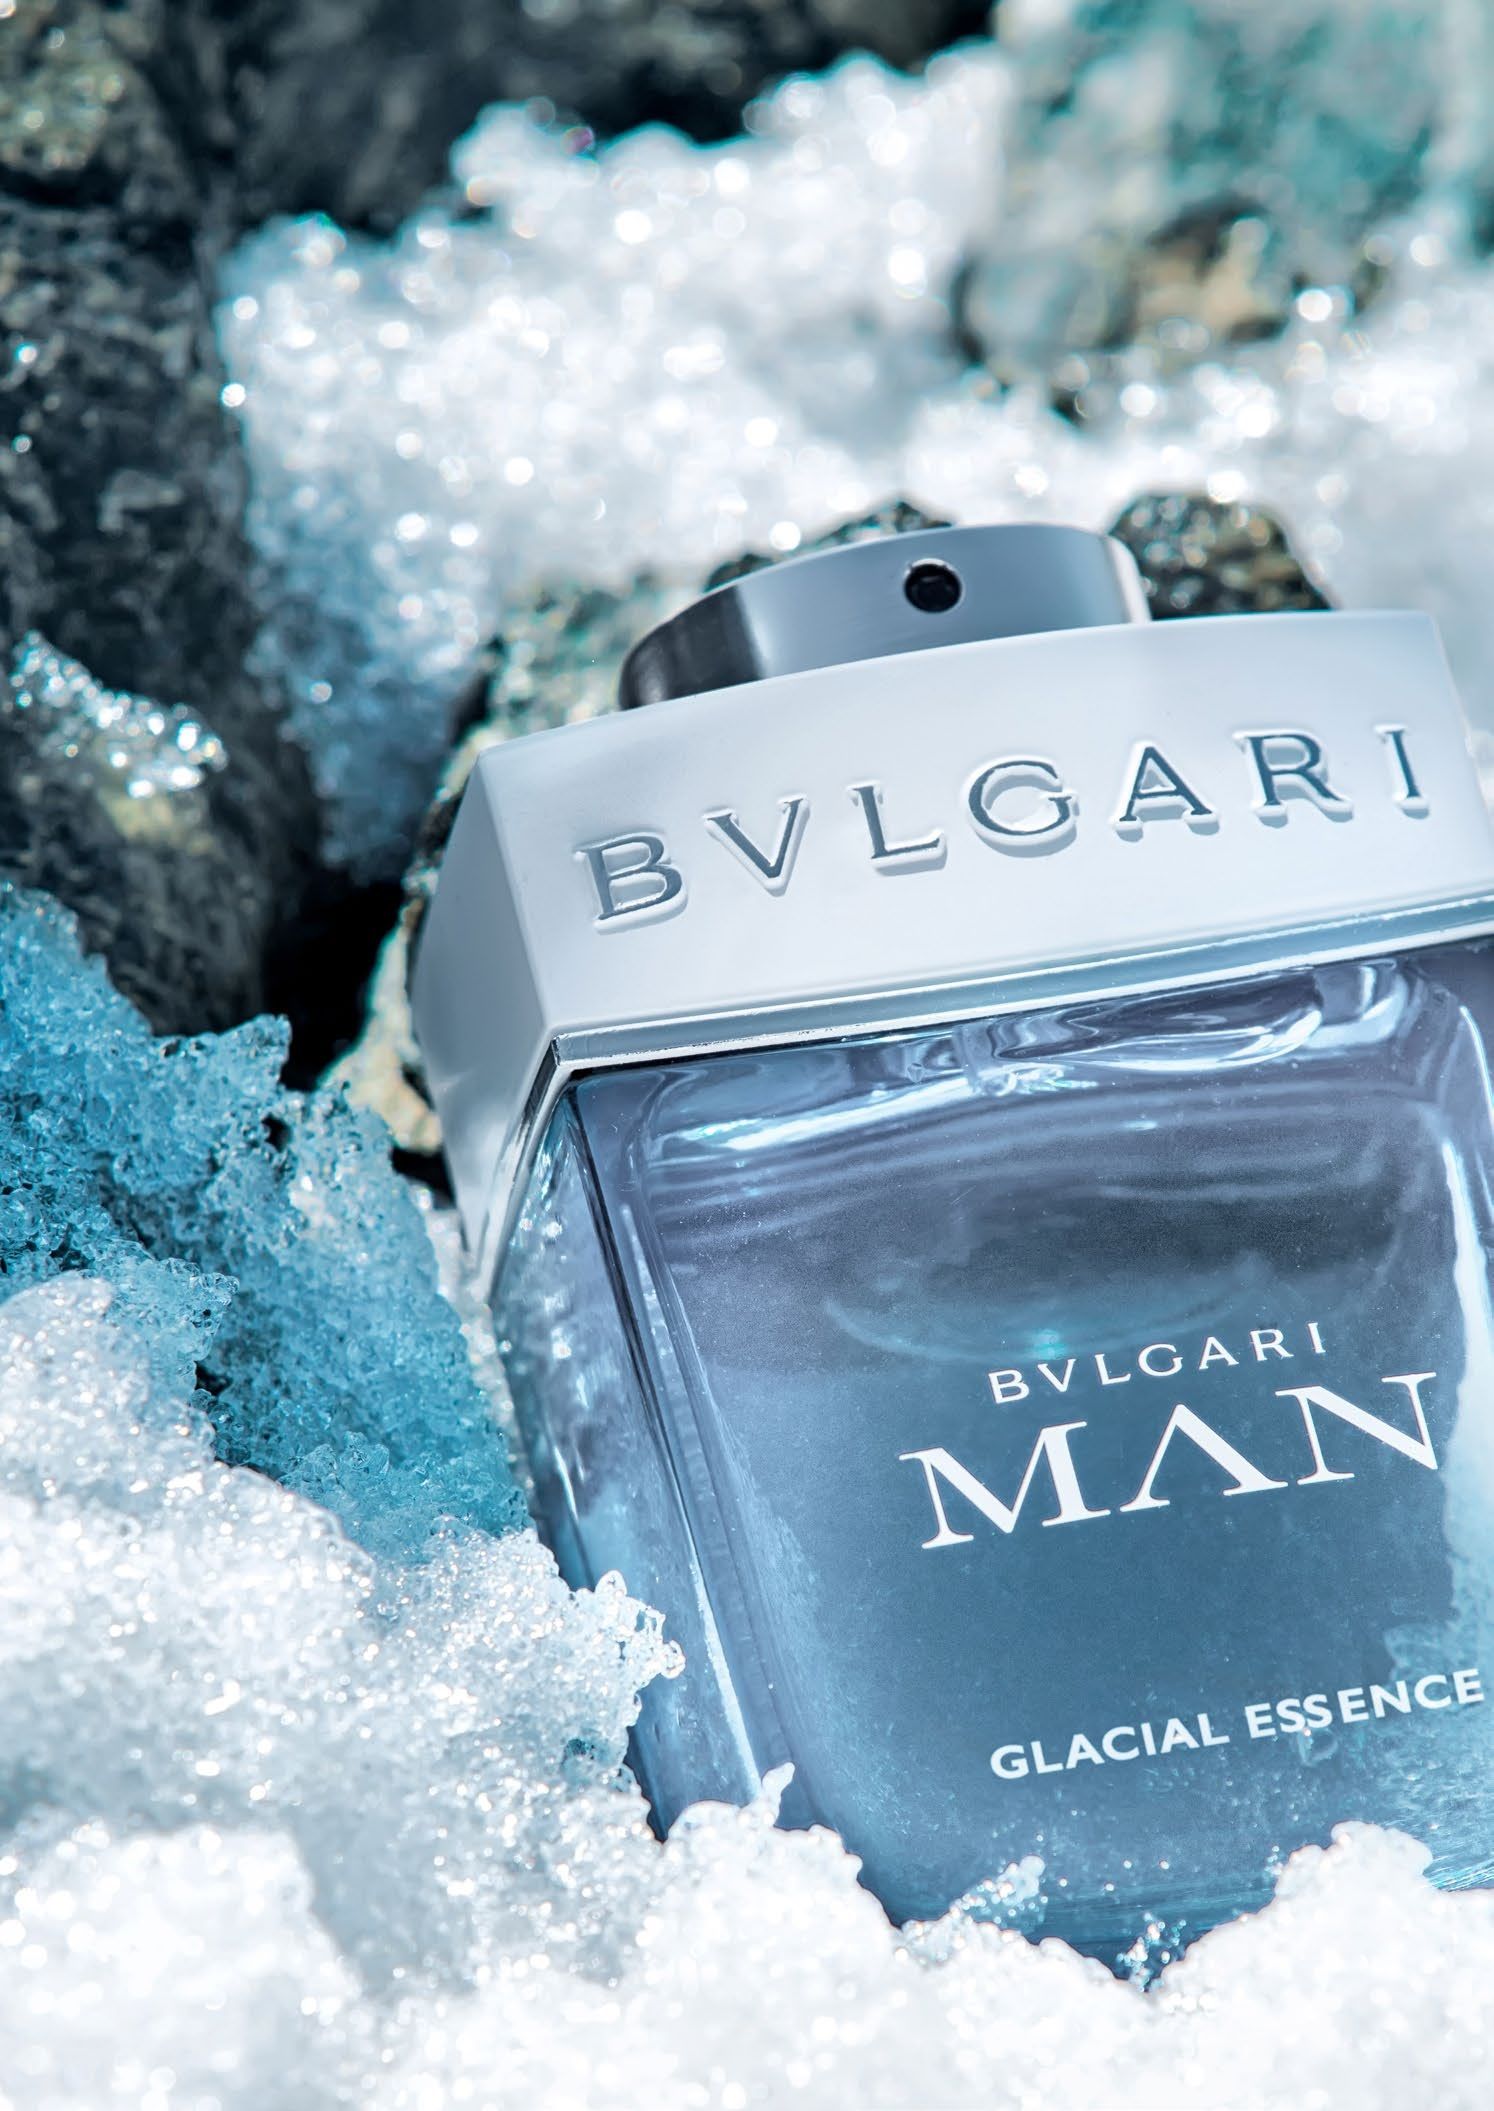 Bvlgari Man Glacial Essence Bvlgari cologne - a fragrance for men 2020